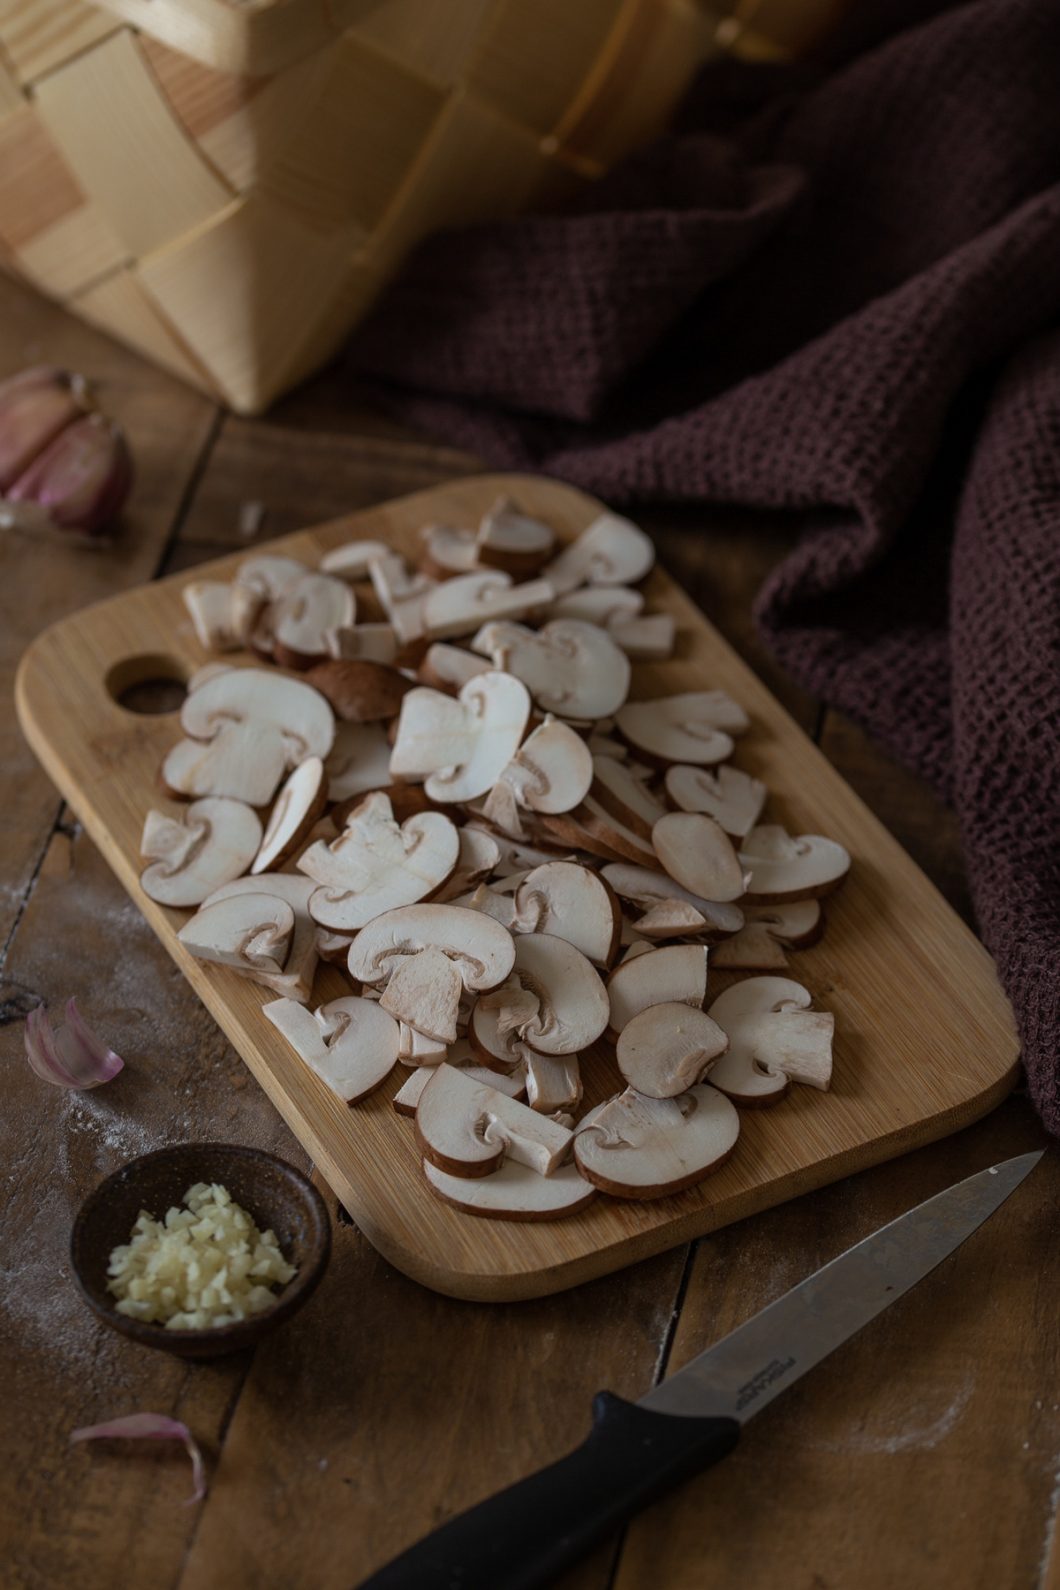 Baby bella mushrooms sliced on a wooden cutting board.